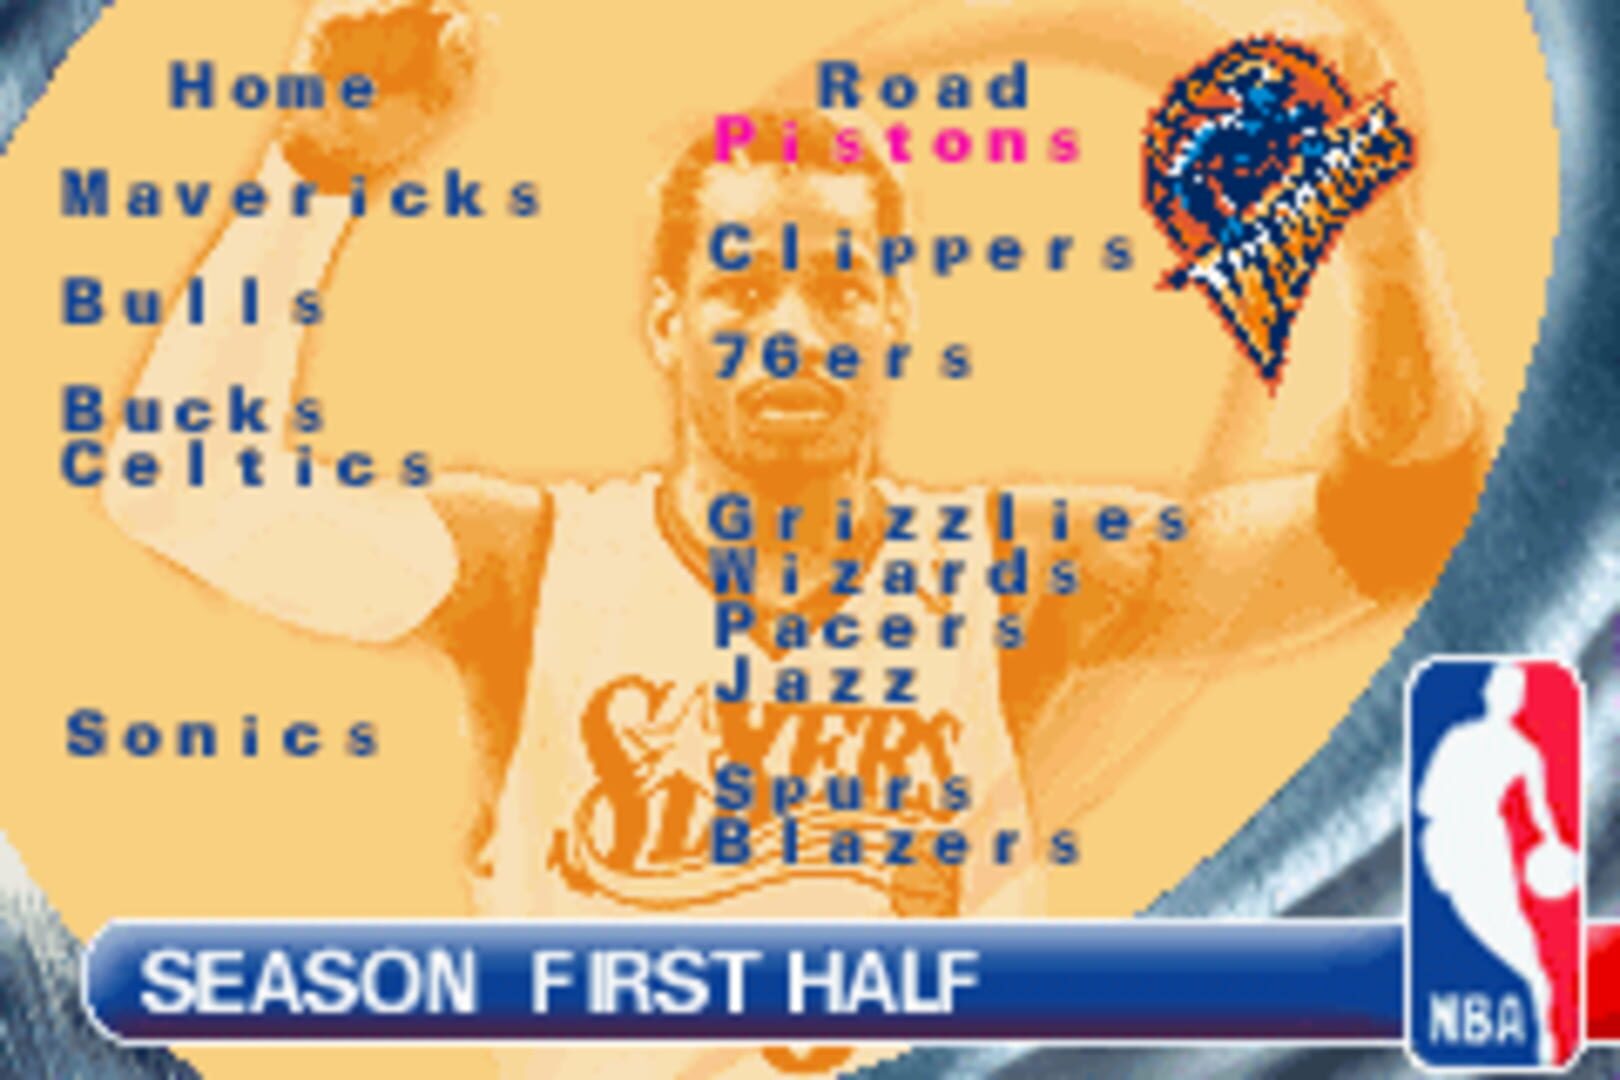 Captura de pantalla - NBA Jam 2002